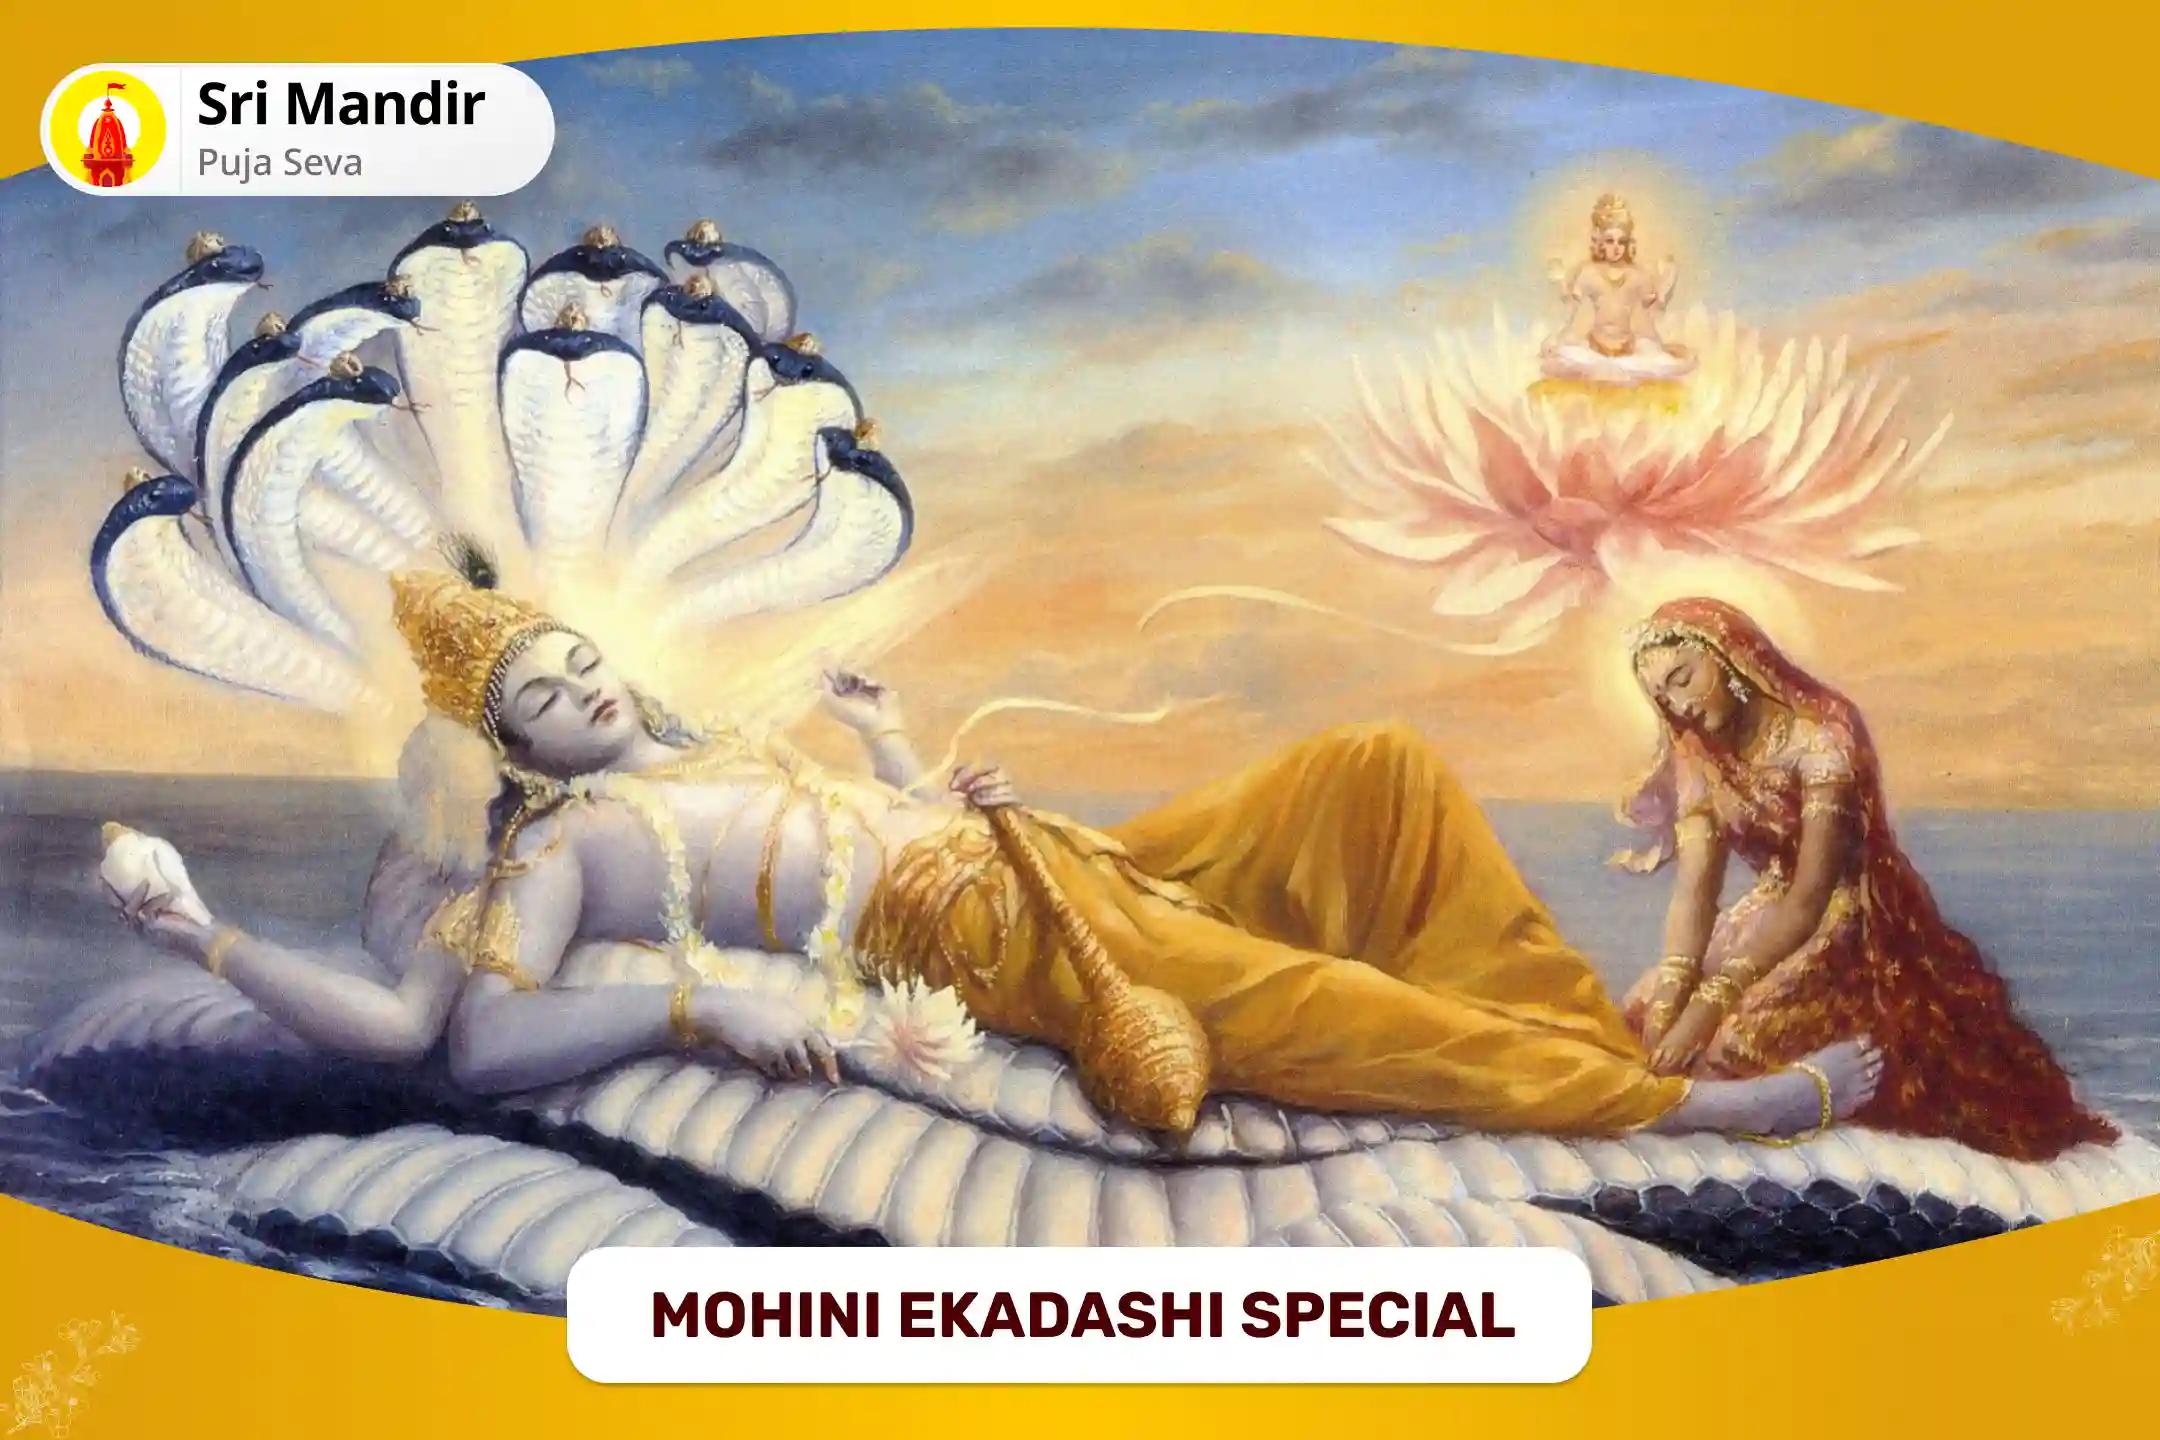 Mohini Ekadashi Special Ekadashi Vrat Katha, Vishnu Sahasranama Path and Anna Daan for Prosperity and Spiritual Well-Being